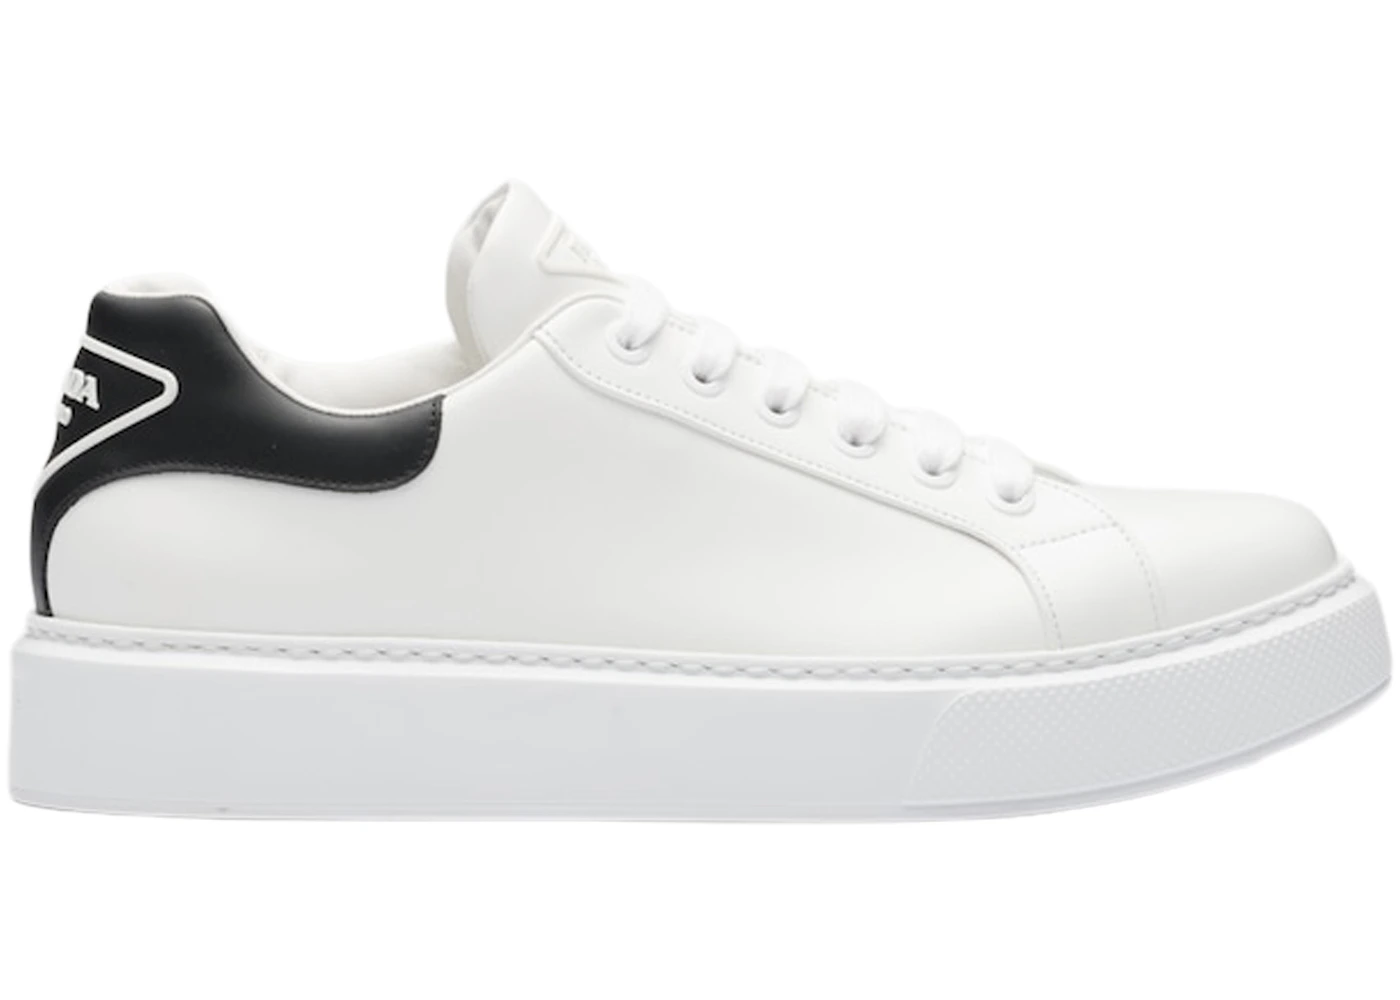 Prada Macro Leather Sneakers White Black Men's - 4E3583_3G4I_F0964 - US